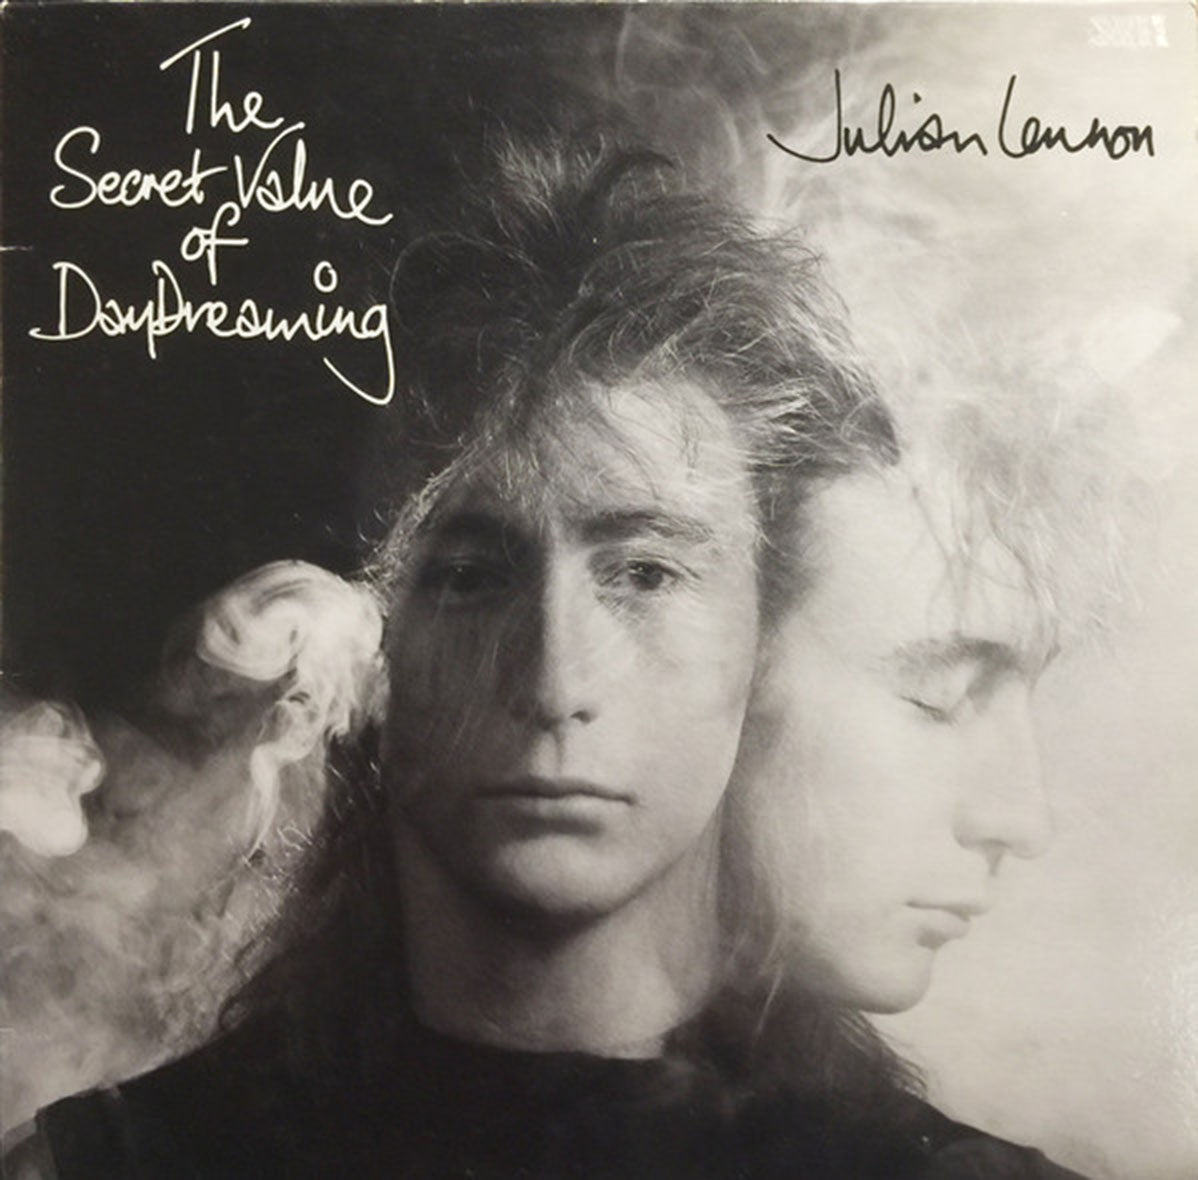 Julian Lennon – The Secret Value of Daydreaming - 1986 DMM Pressing